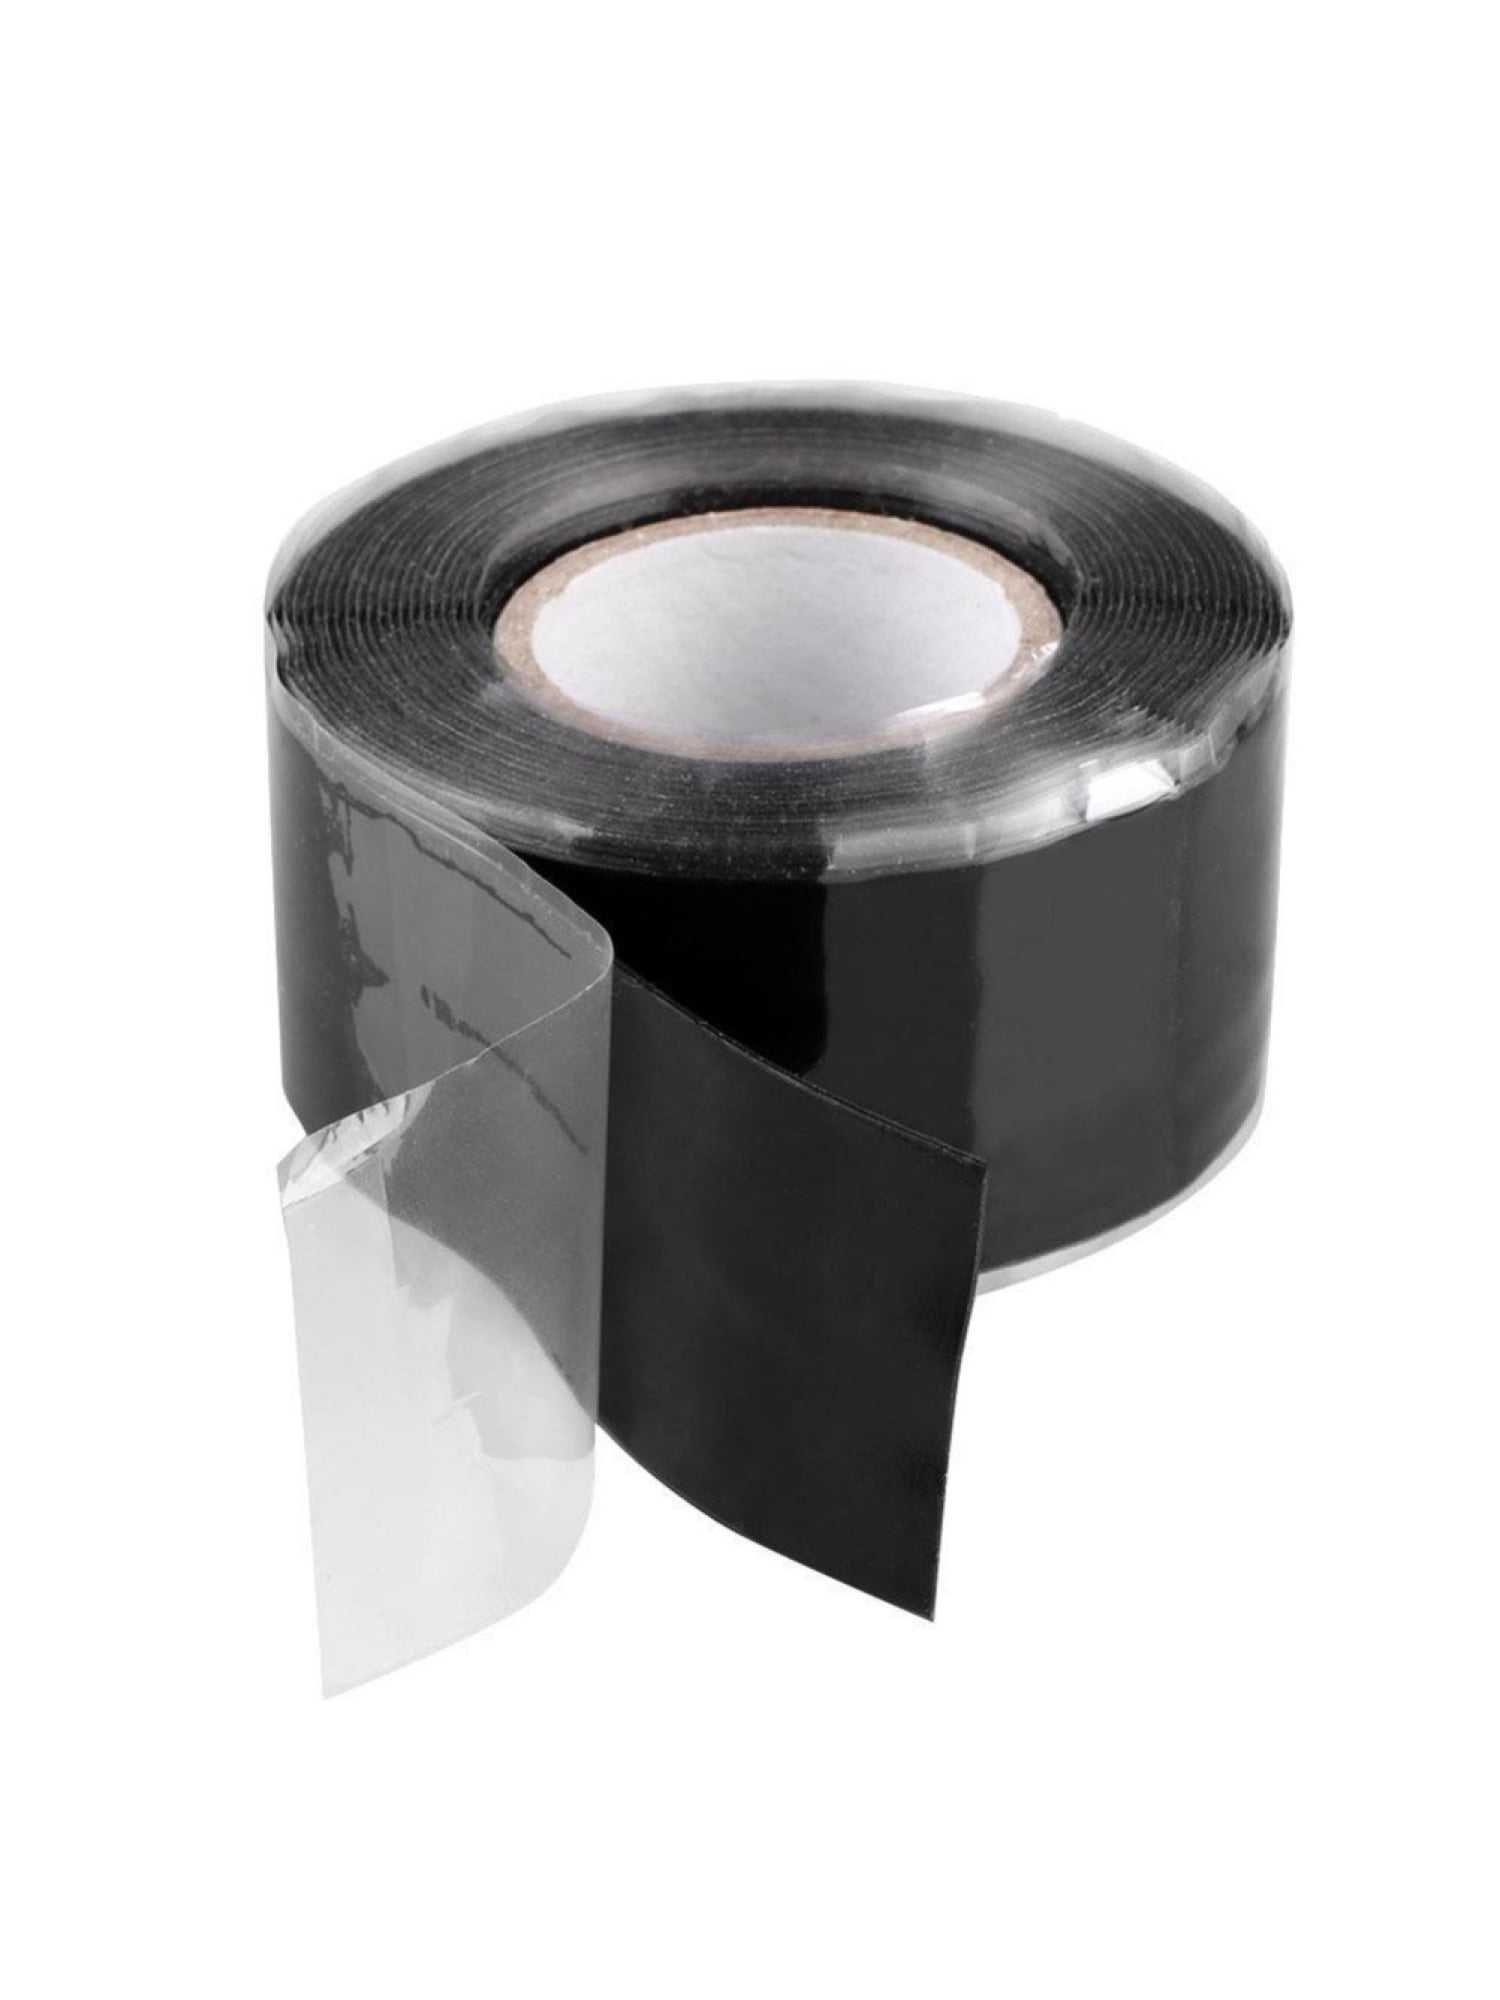 150cm Duct Tape Roll Craft Repair Tool Heavy Duty Adhesive Waterproof Tape 